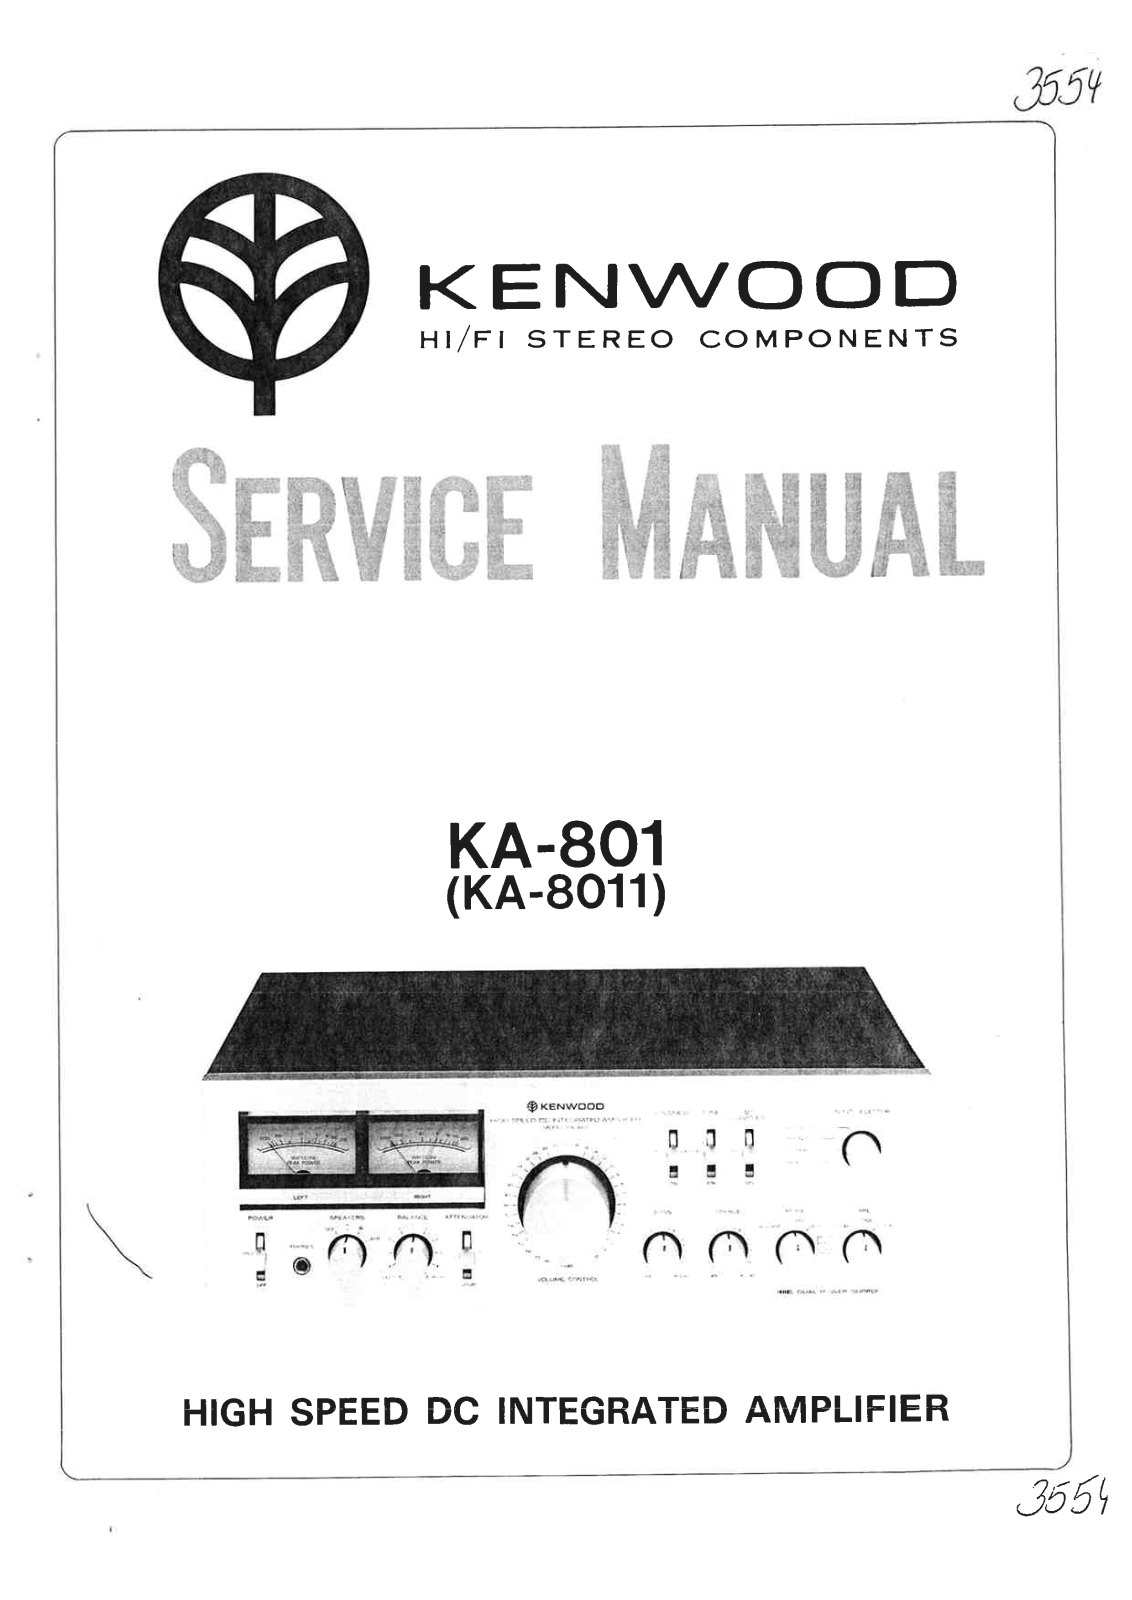 Kenwood KA-801, KA-8011 Service manual